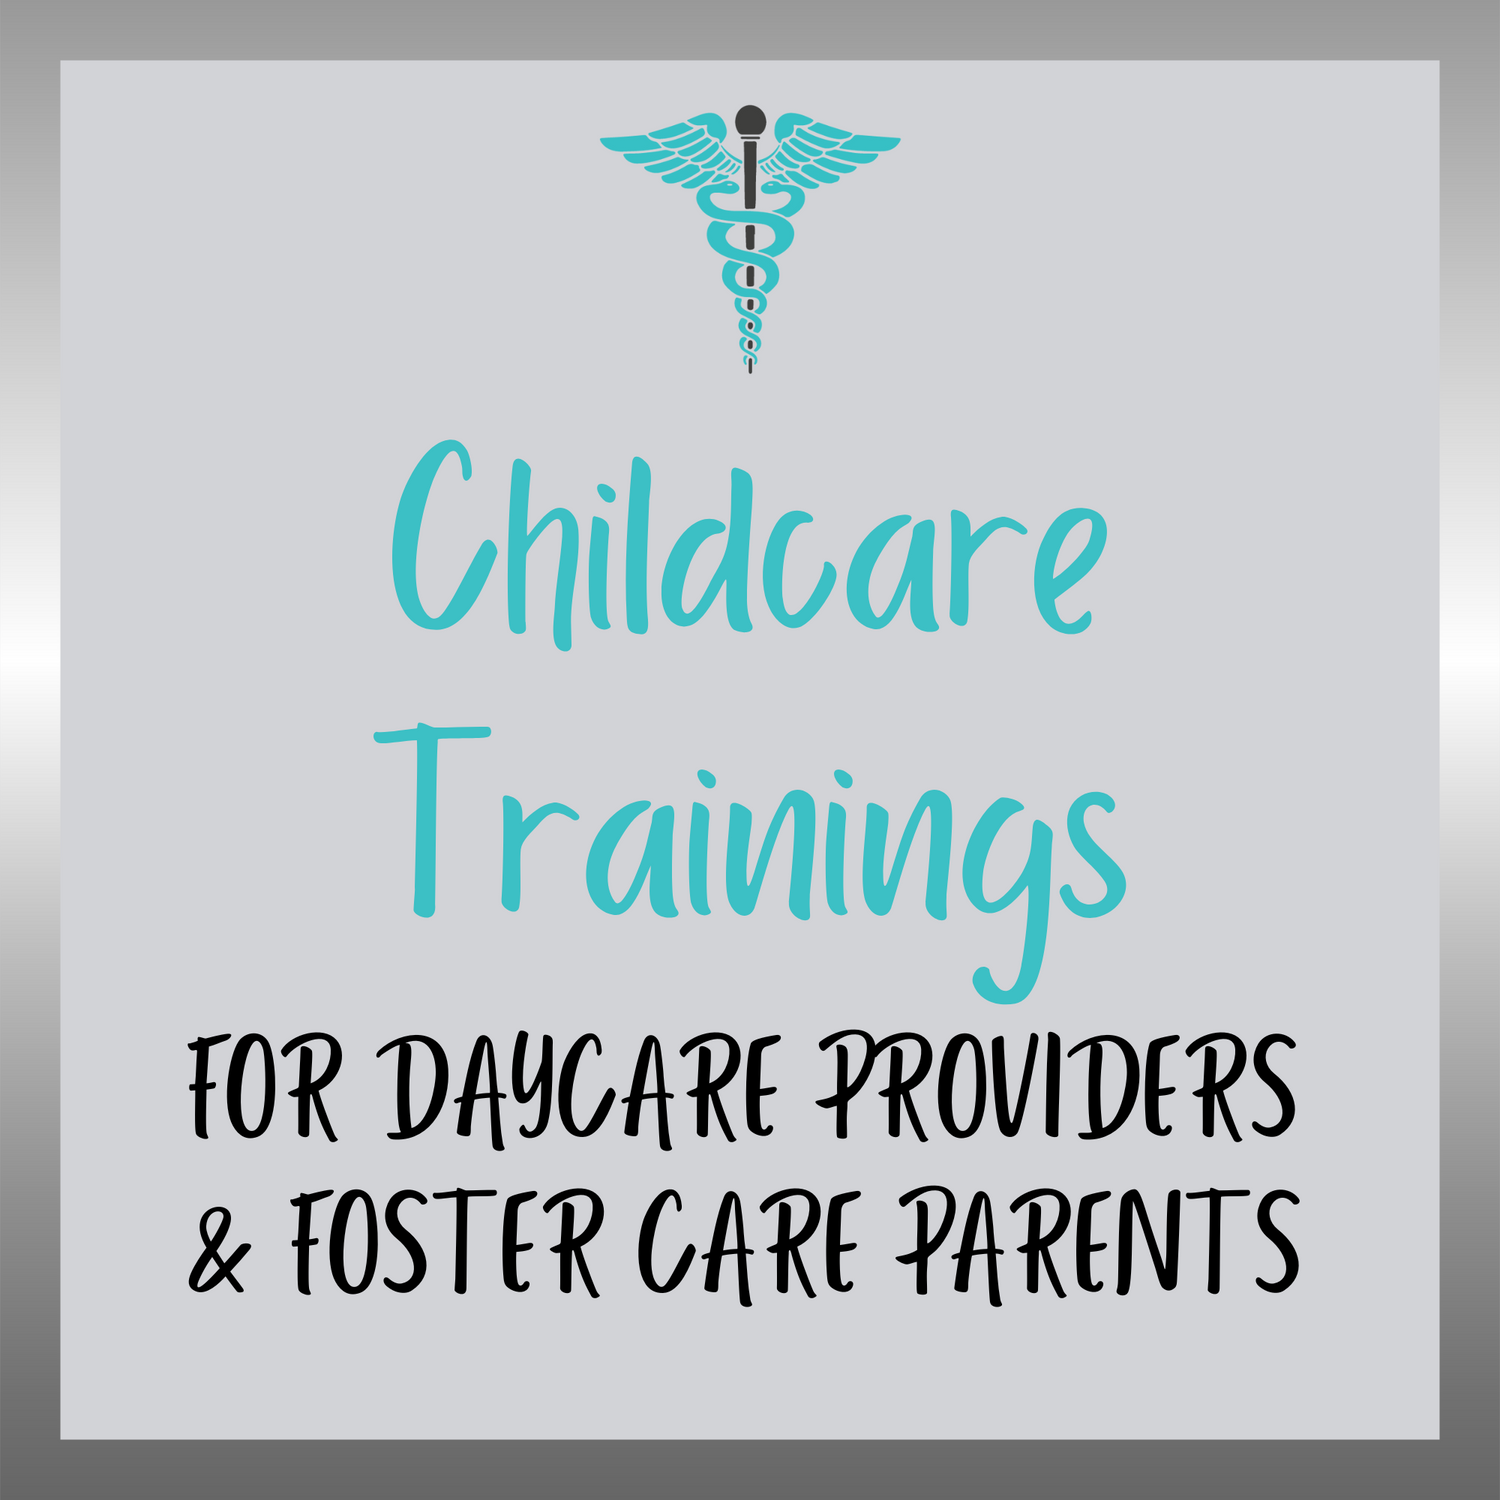 Childcare Trainings